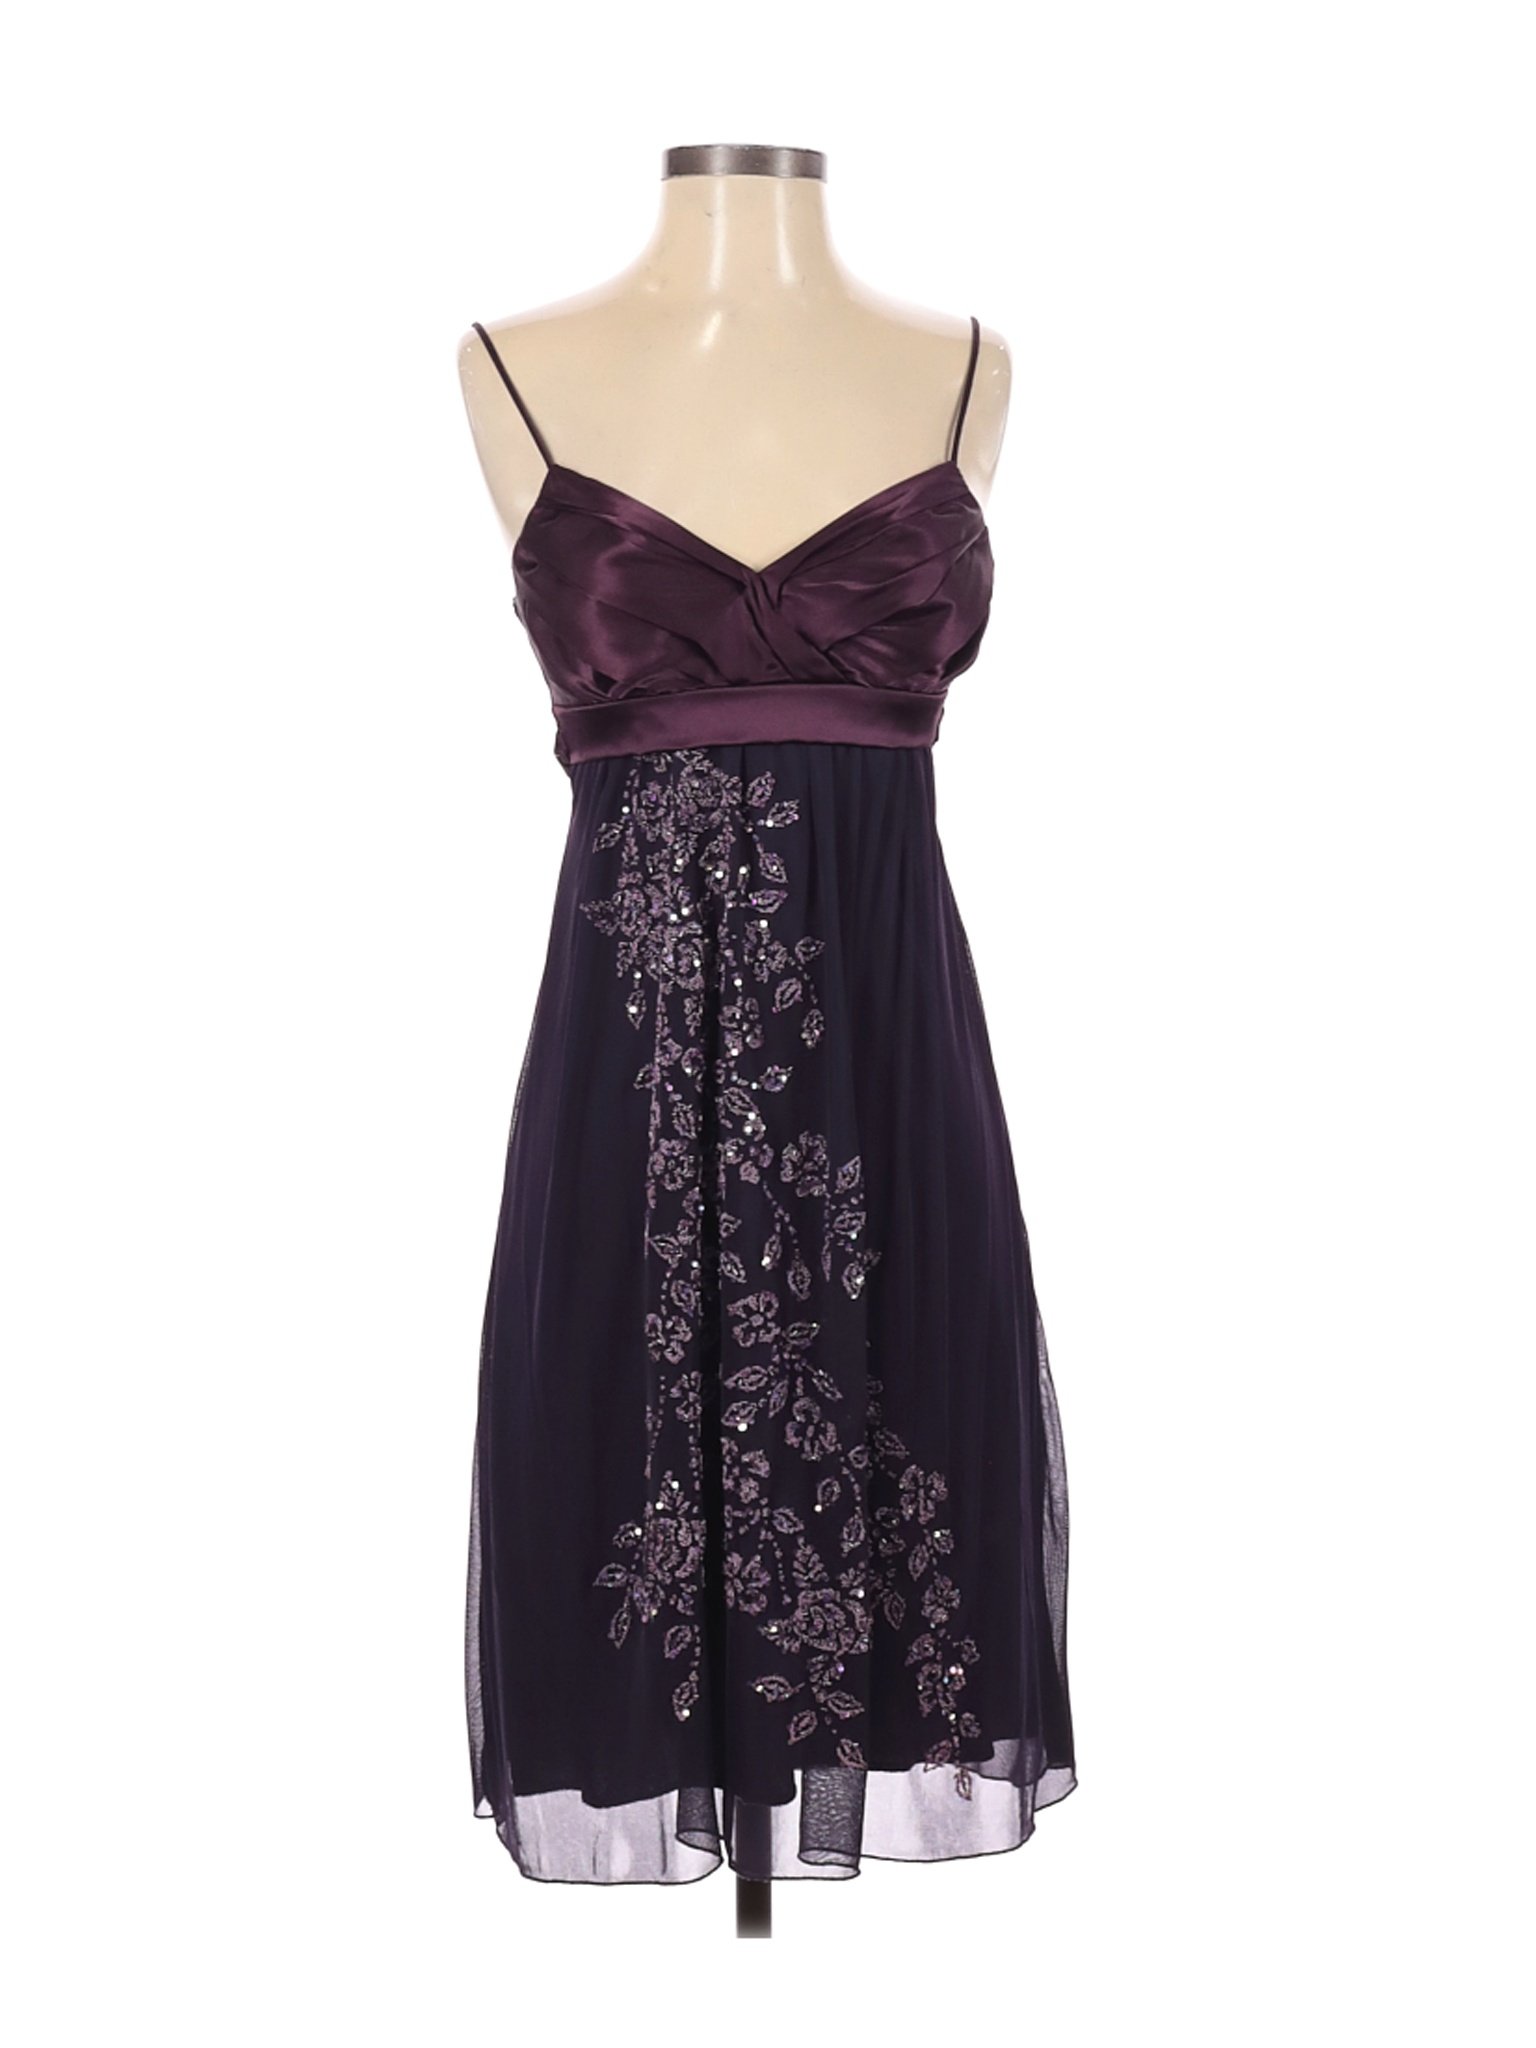 City Triangles Women Purple Cocktail Dress S | eBay